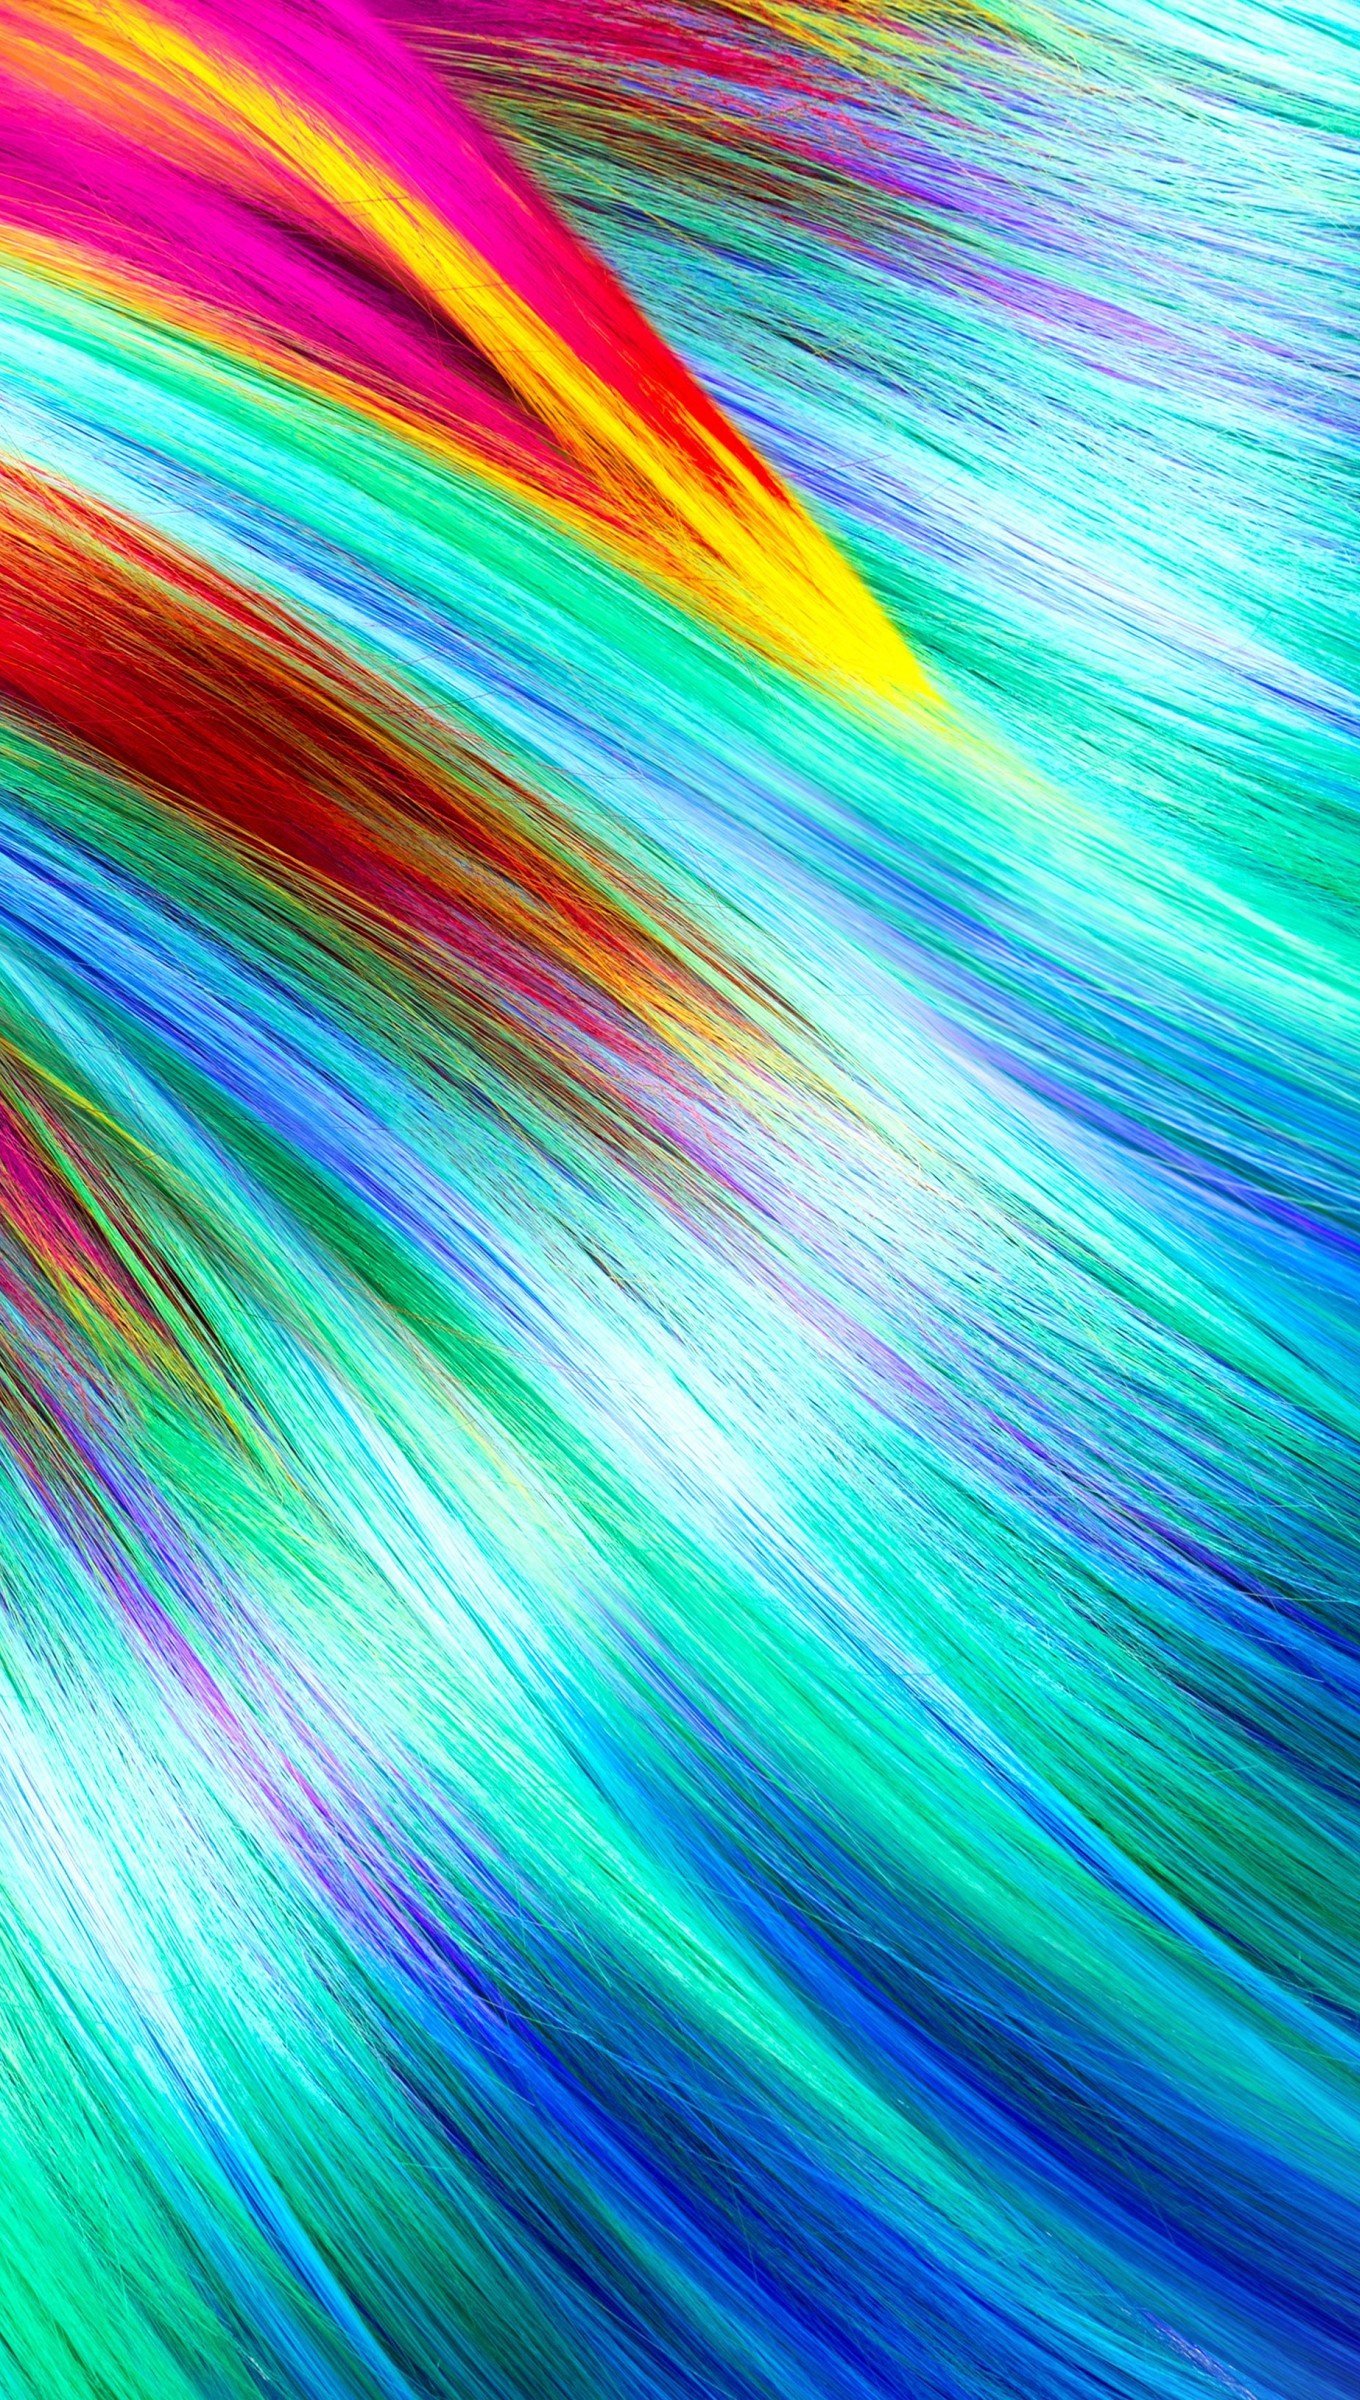 Fondos de pantalla Mujer con cabello de colores del arcoiris Vertical